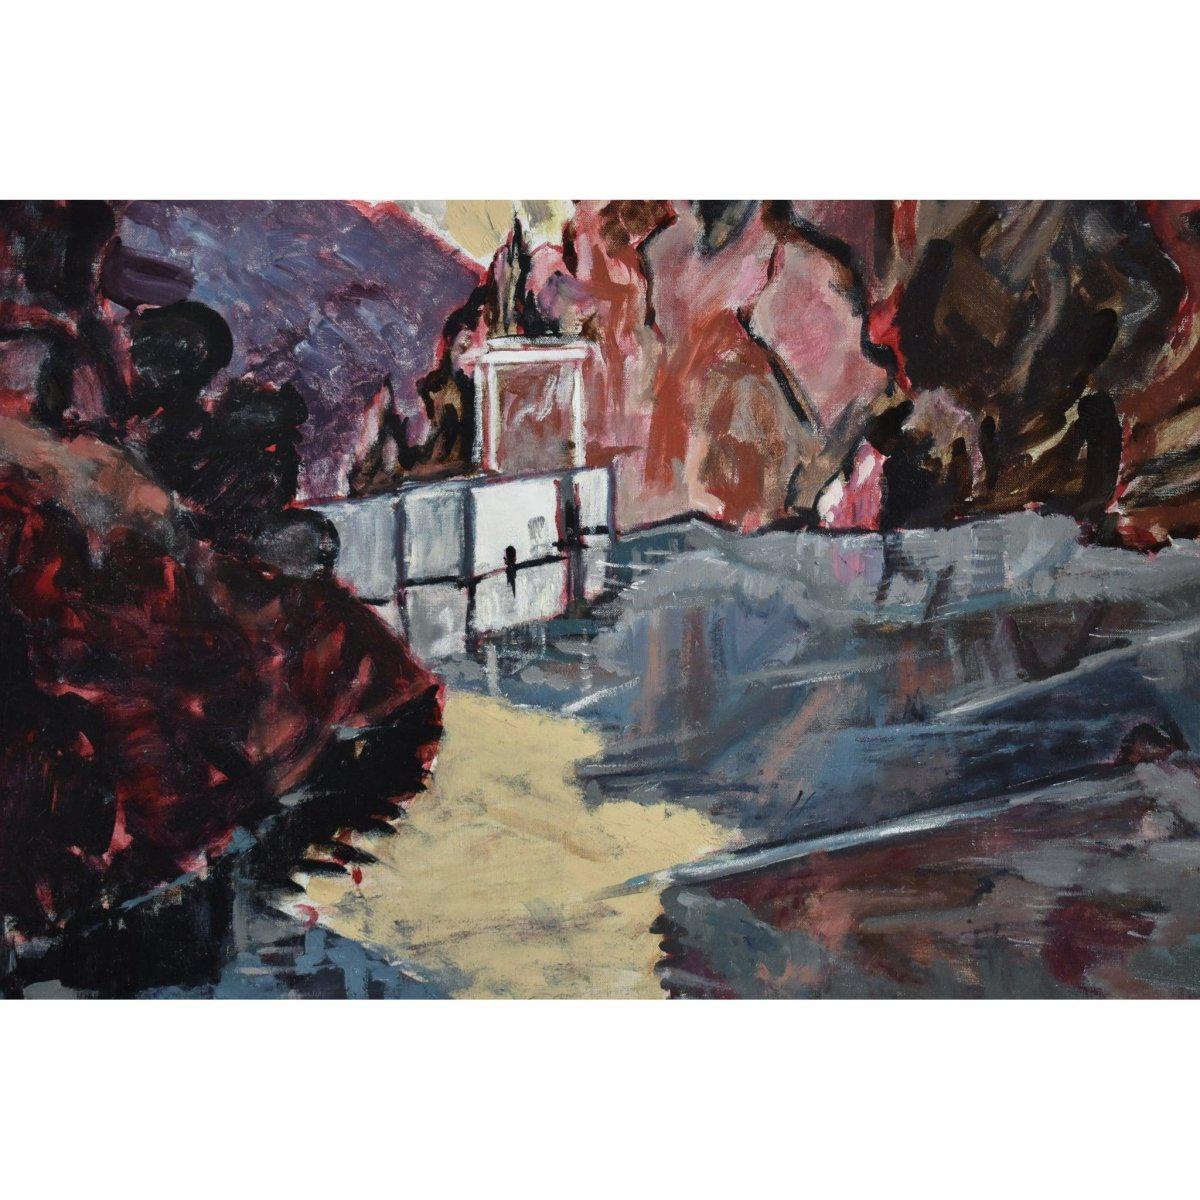 Vintage landscape oil painting mountain dam original circa 1955 by Stephane Cara for sale at Winckelmann Gallery